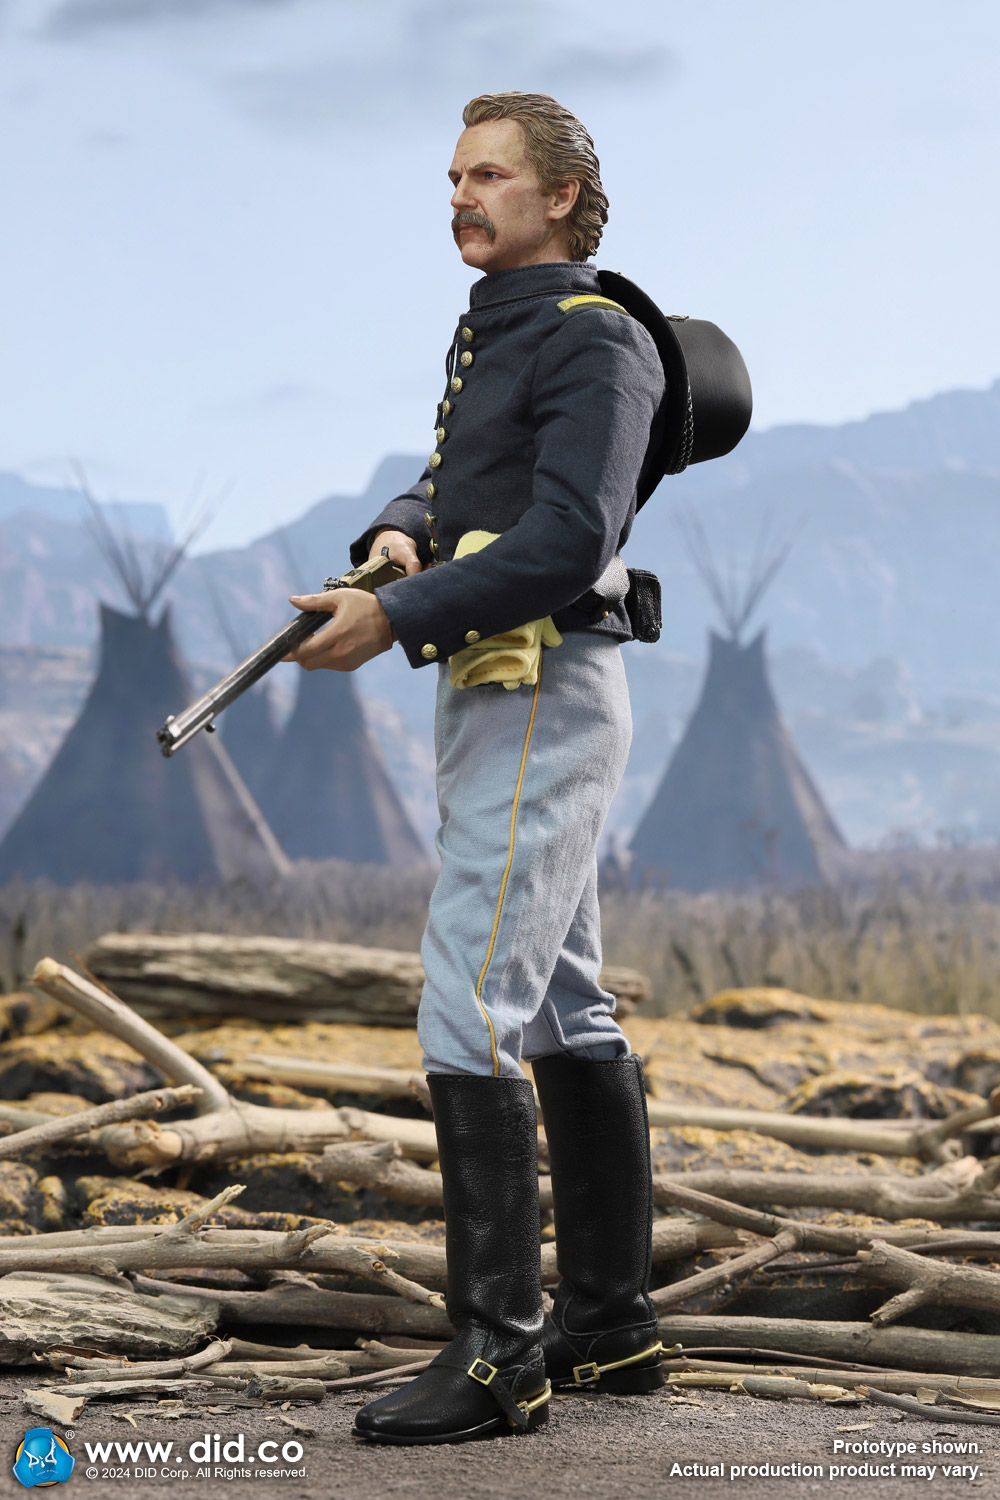 John Dunbar – U.S. Civil War Union Army Lieutenant